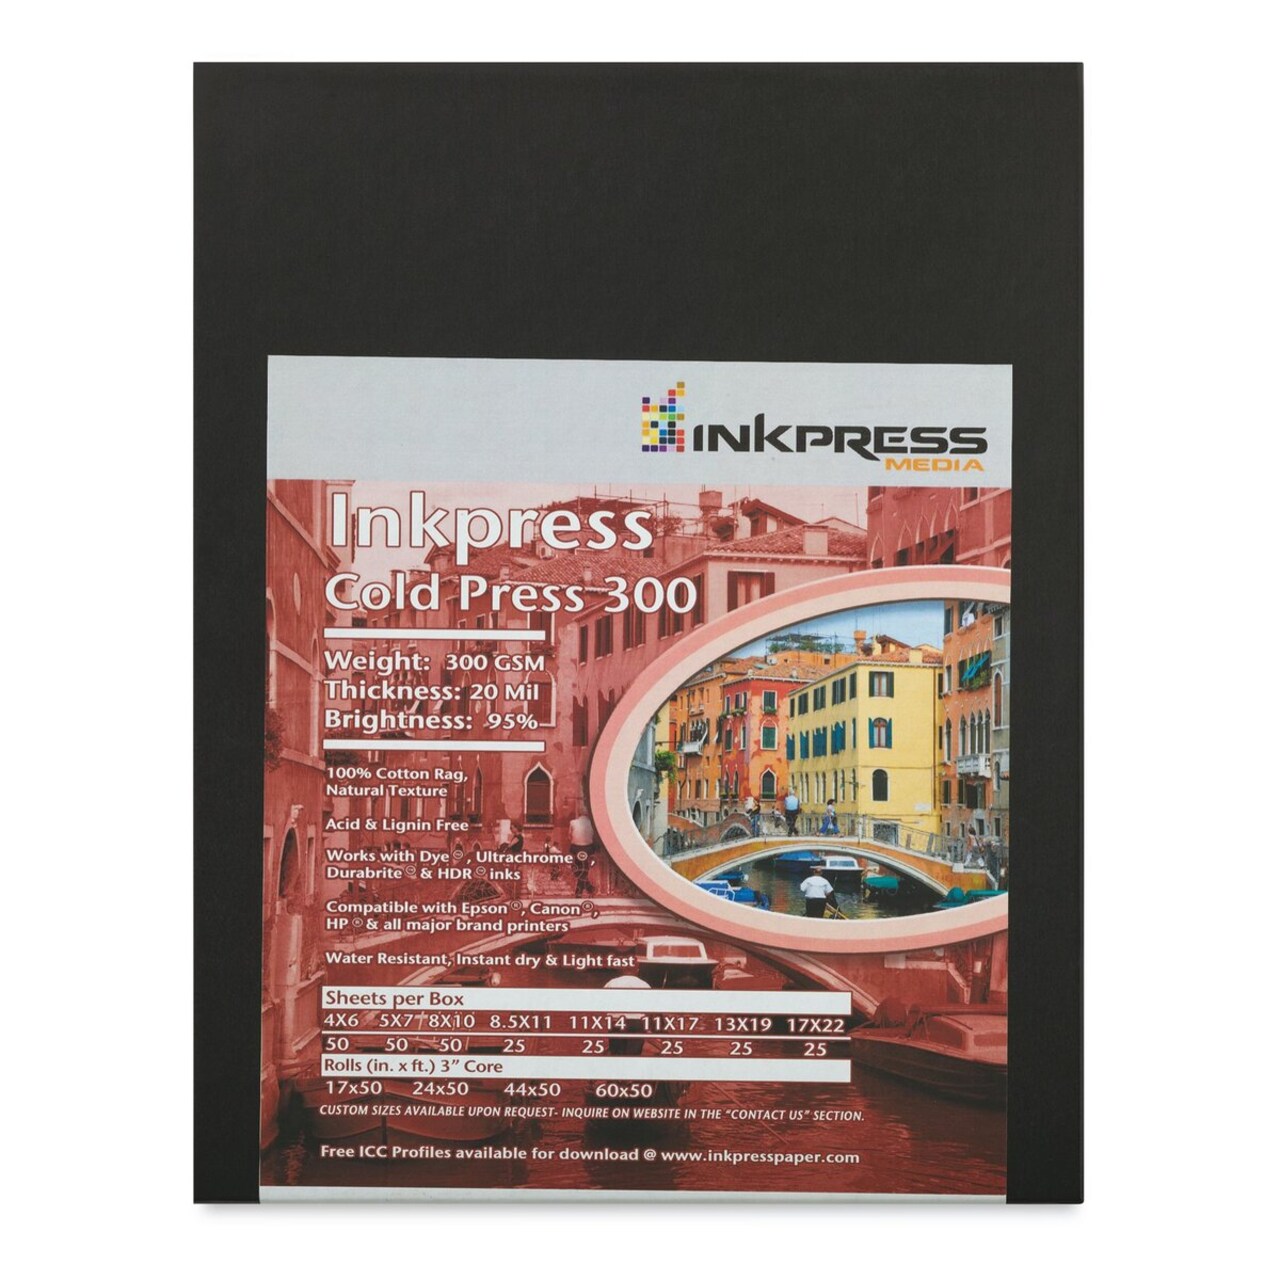 Inkpress Cold Press 300 Paper - 8-1/2 x 11, 300 gsm, 25 Sheets